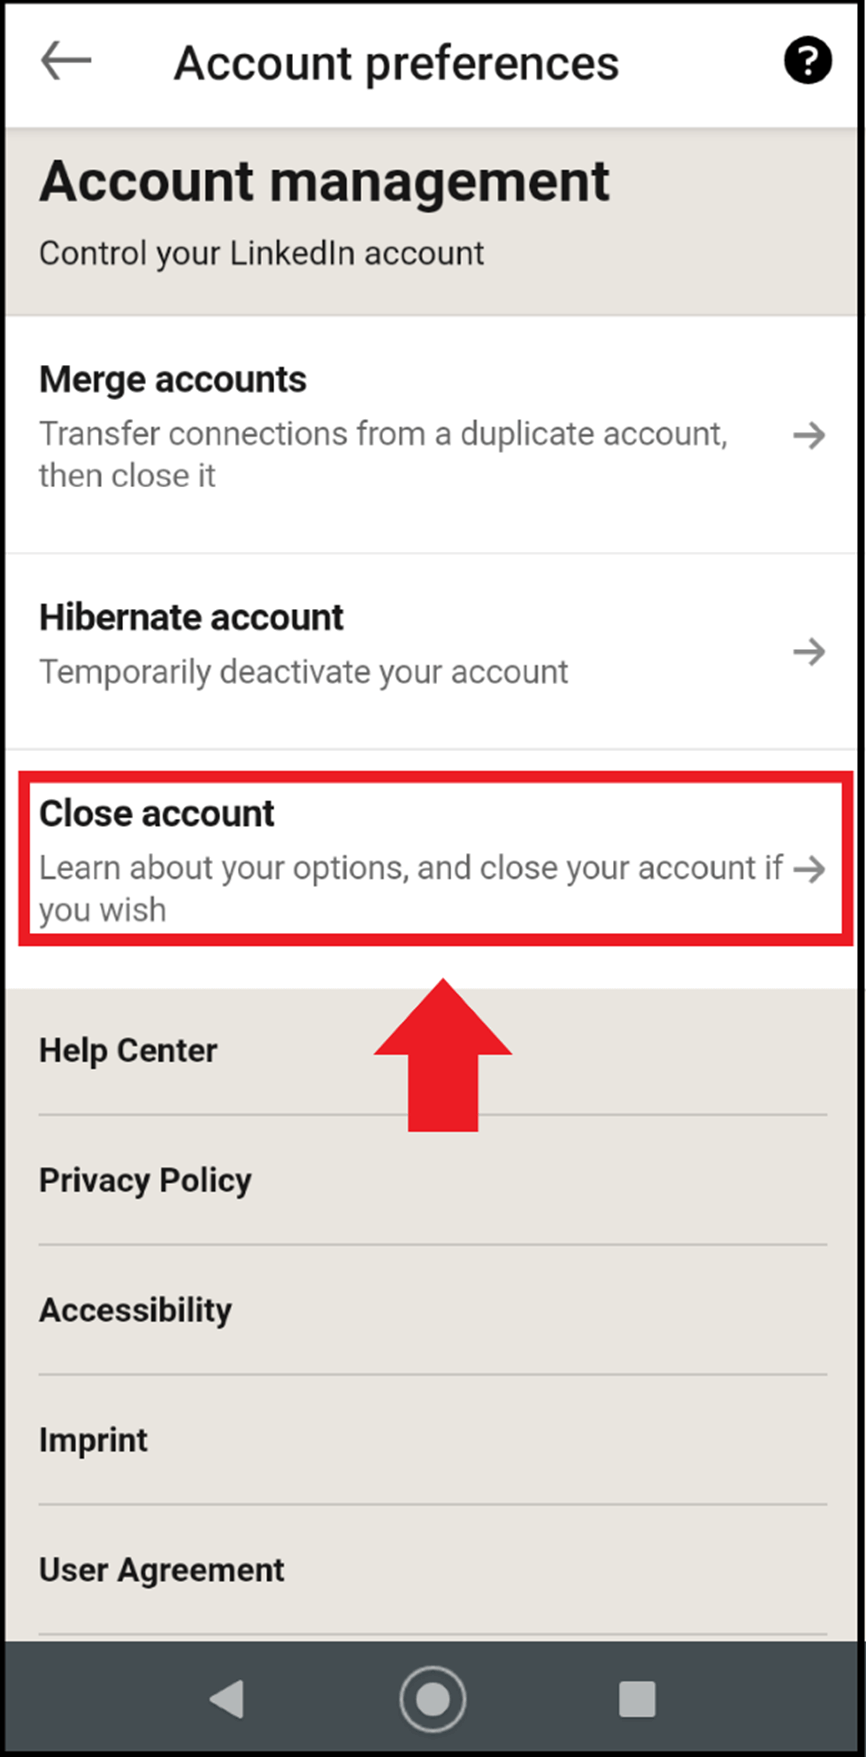 Delete your LinkedIn profile with “Close account”